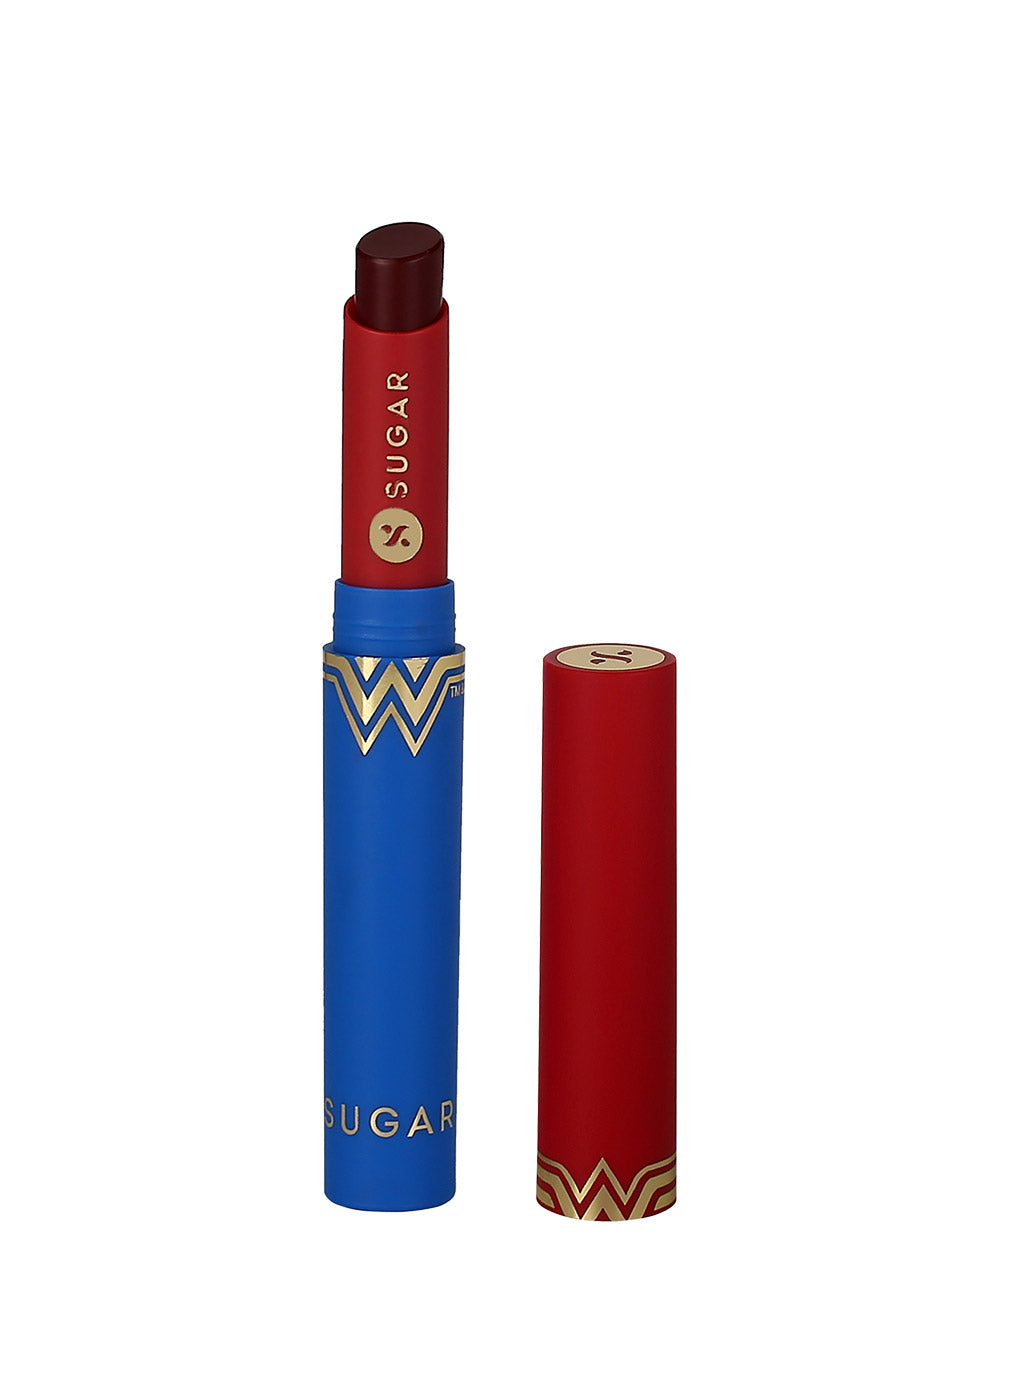 SUGAR Cosmetics Wonder Woman Creamy Matte Lipstick - 10 Legendary Lass (Deep Wine)